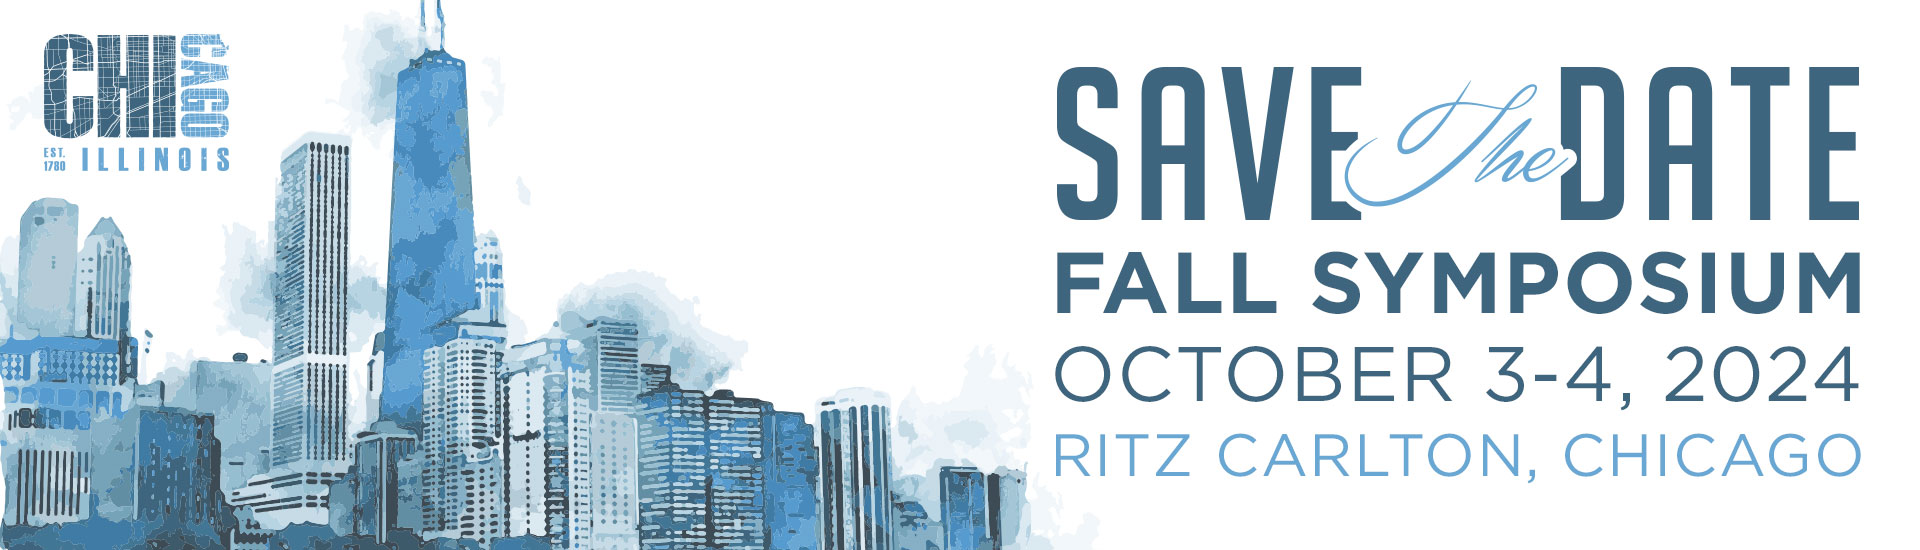 Fall Symposium • Chicago, Illinois • October 3-4